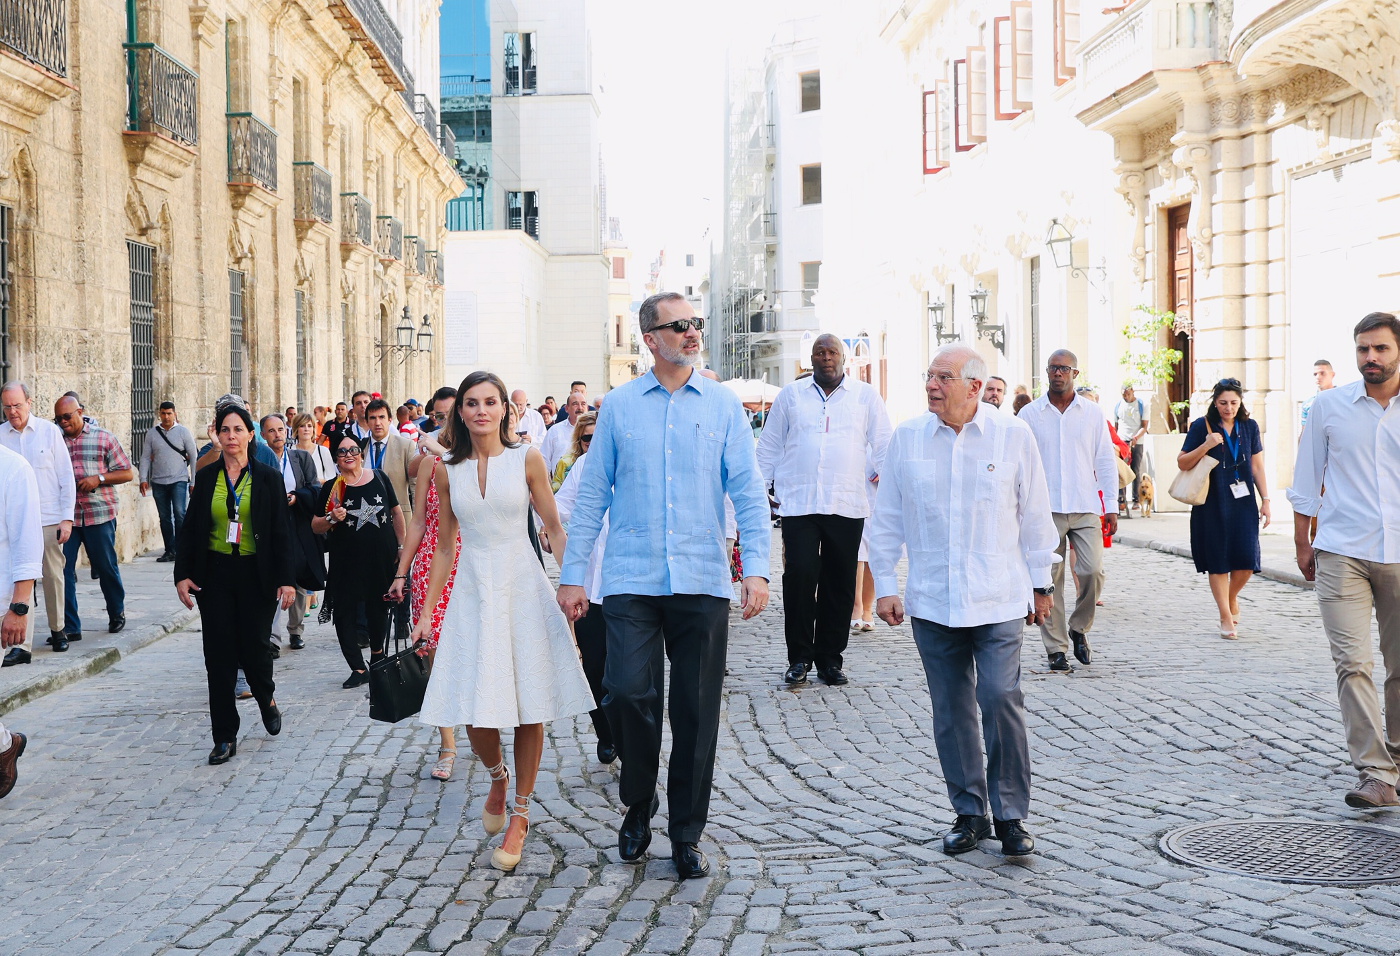 La reina Letizia con vestido de Carolina Herrera y alpargatas por La Vieja Habana